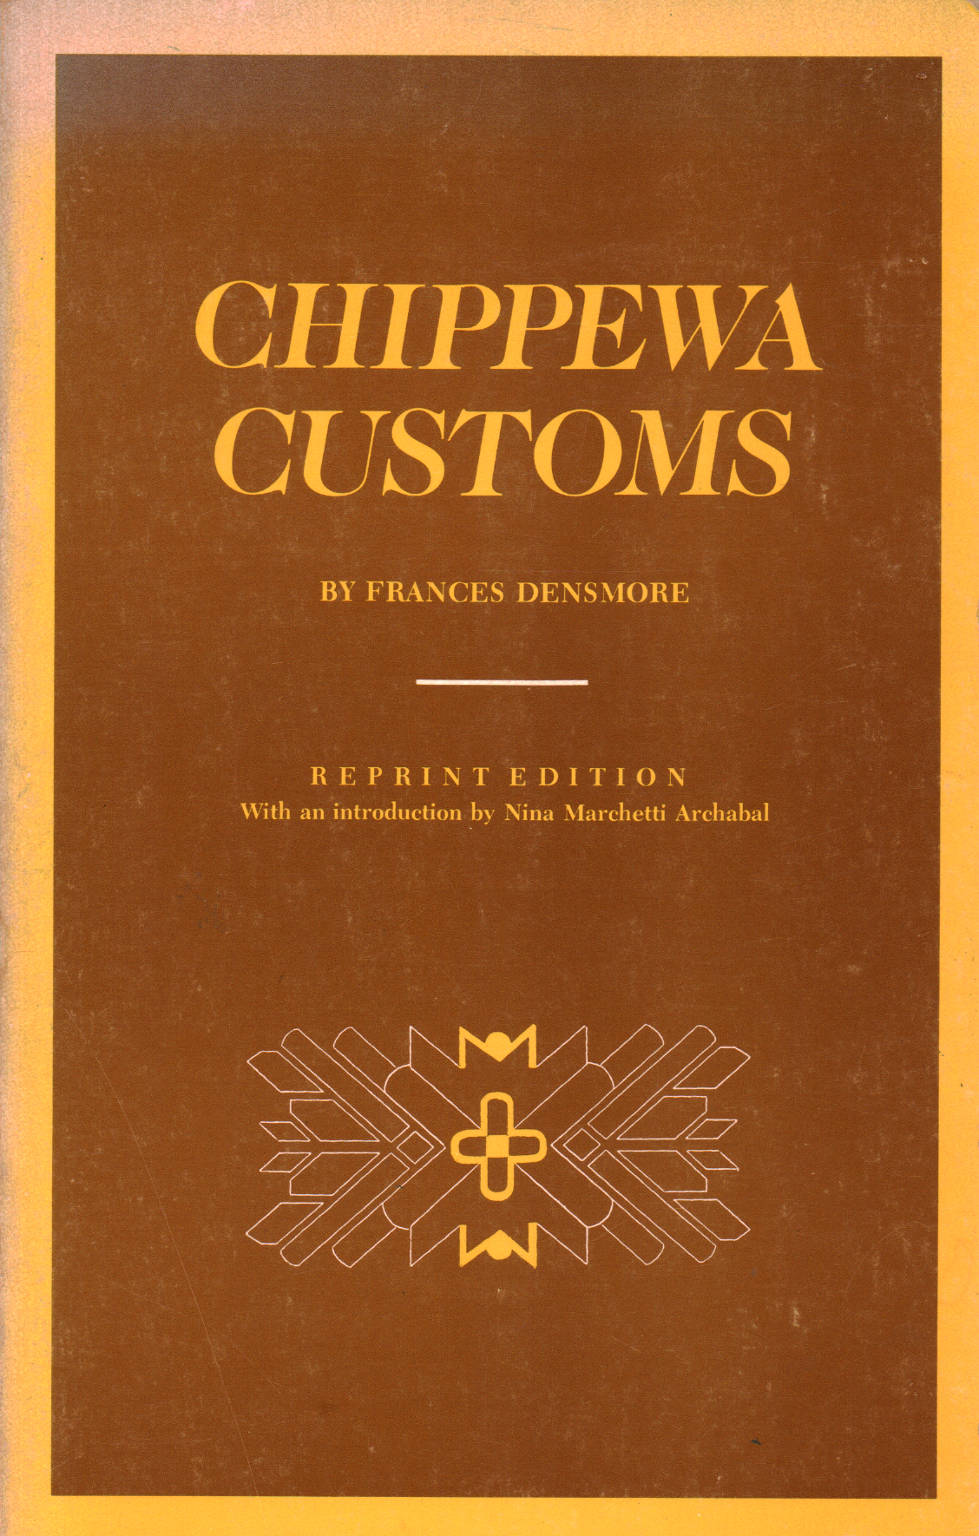 Chippewa Customs, Frances Densmore